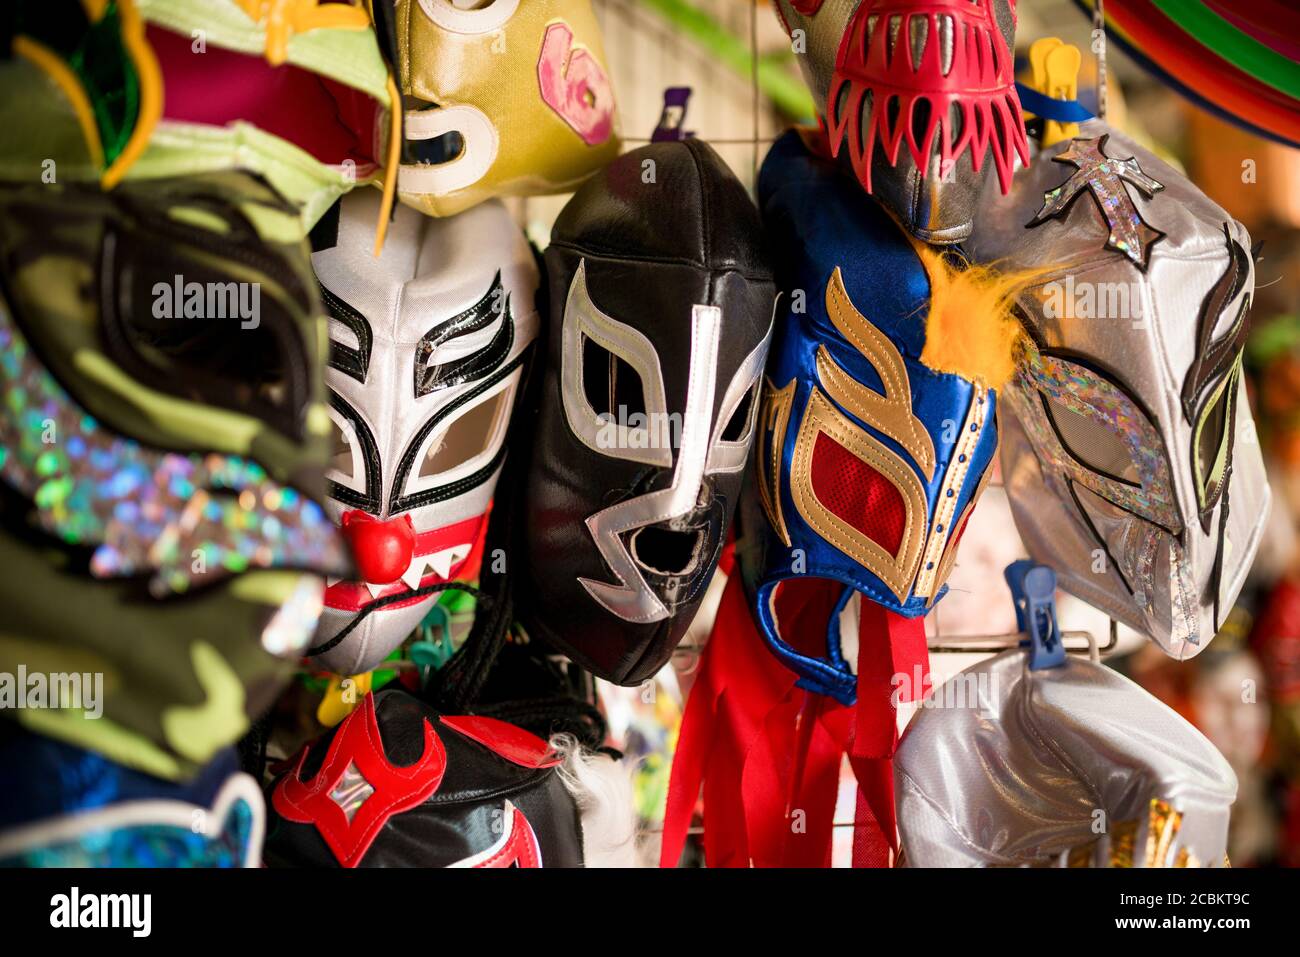 Wrestling mask souvenirs, San Miguel de Allende, Guanajuato, Mexico Stock Photo